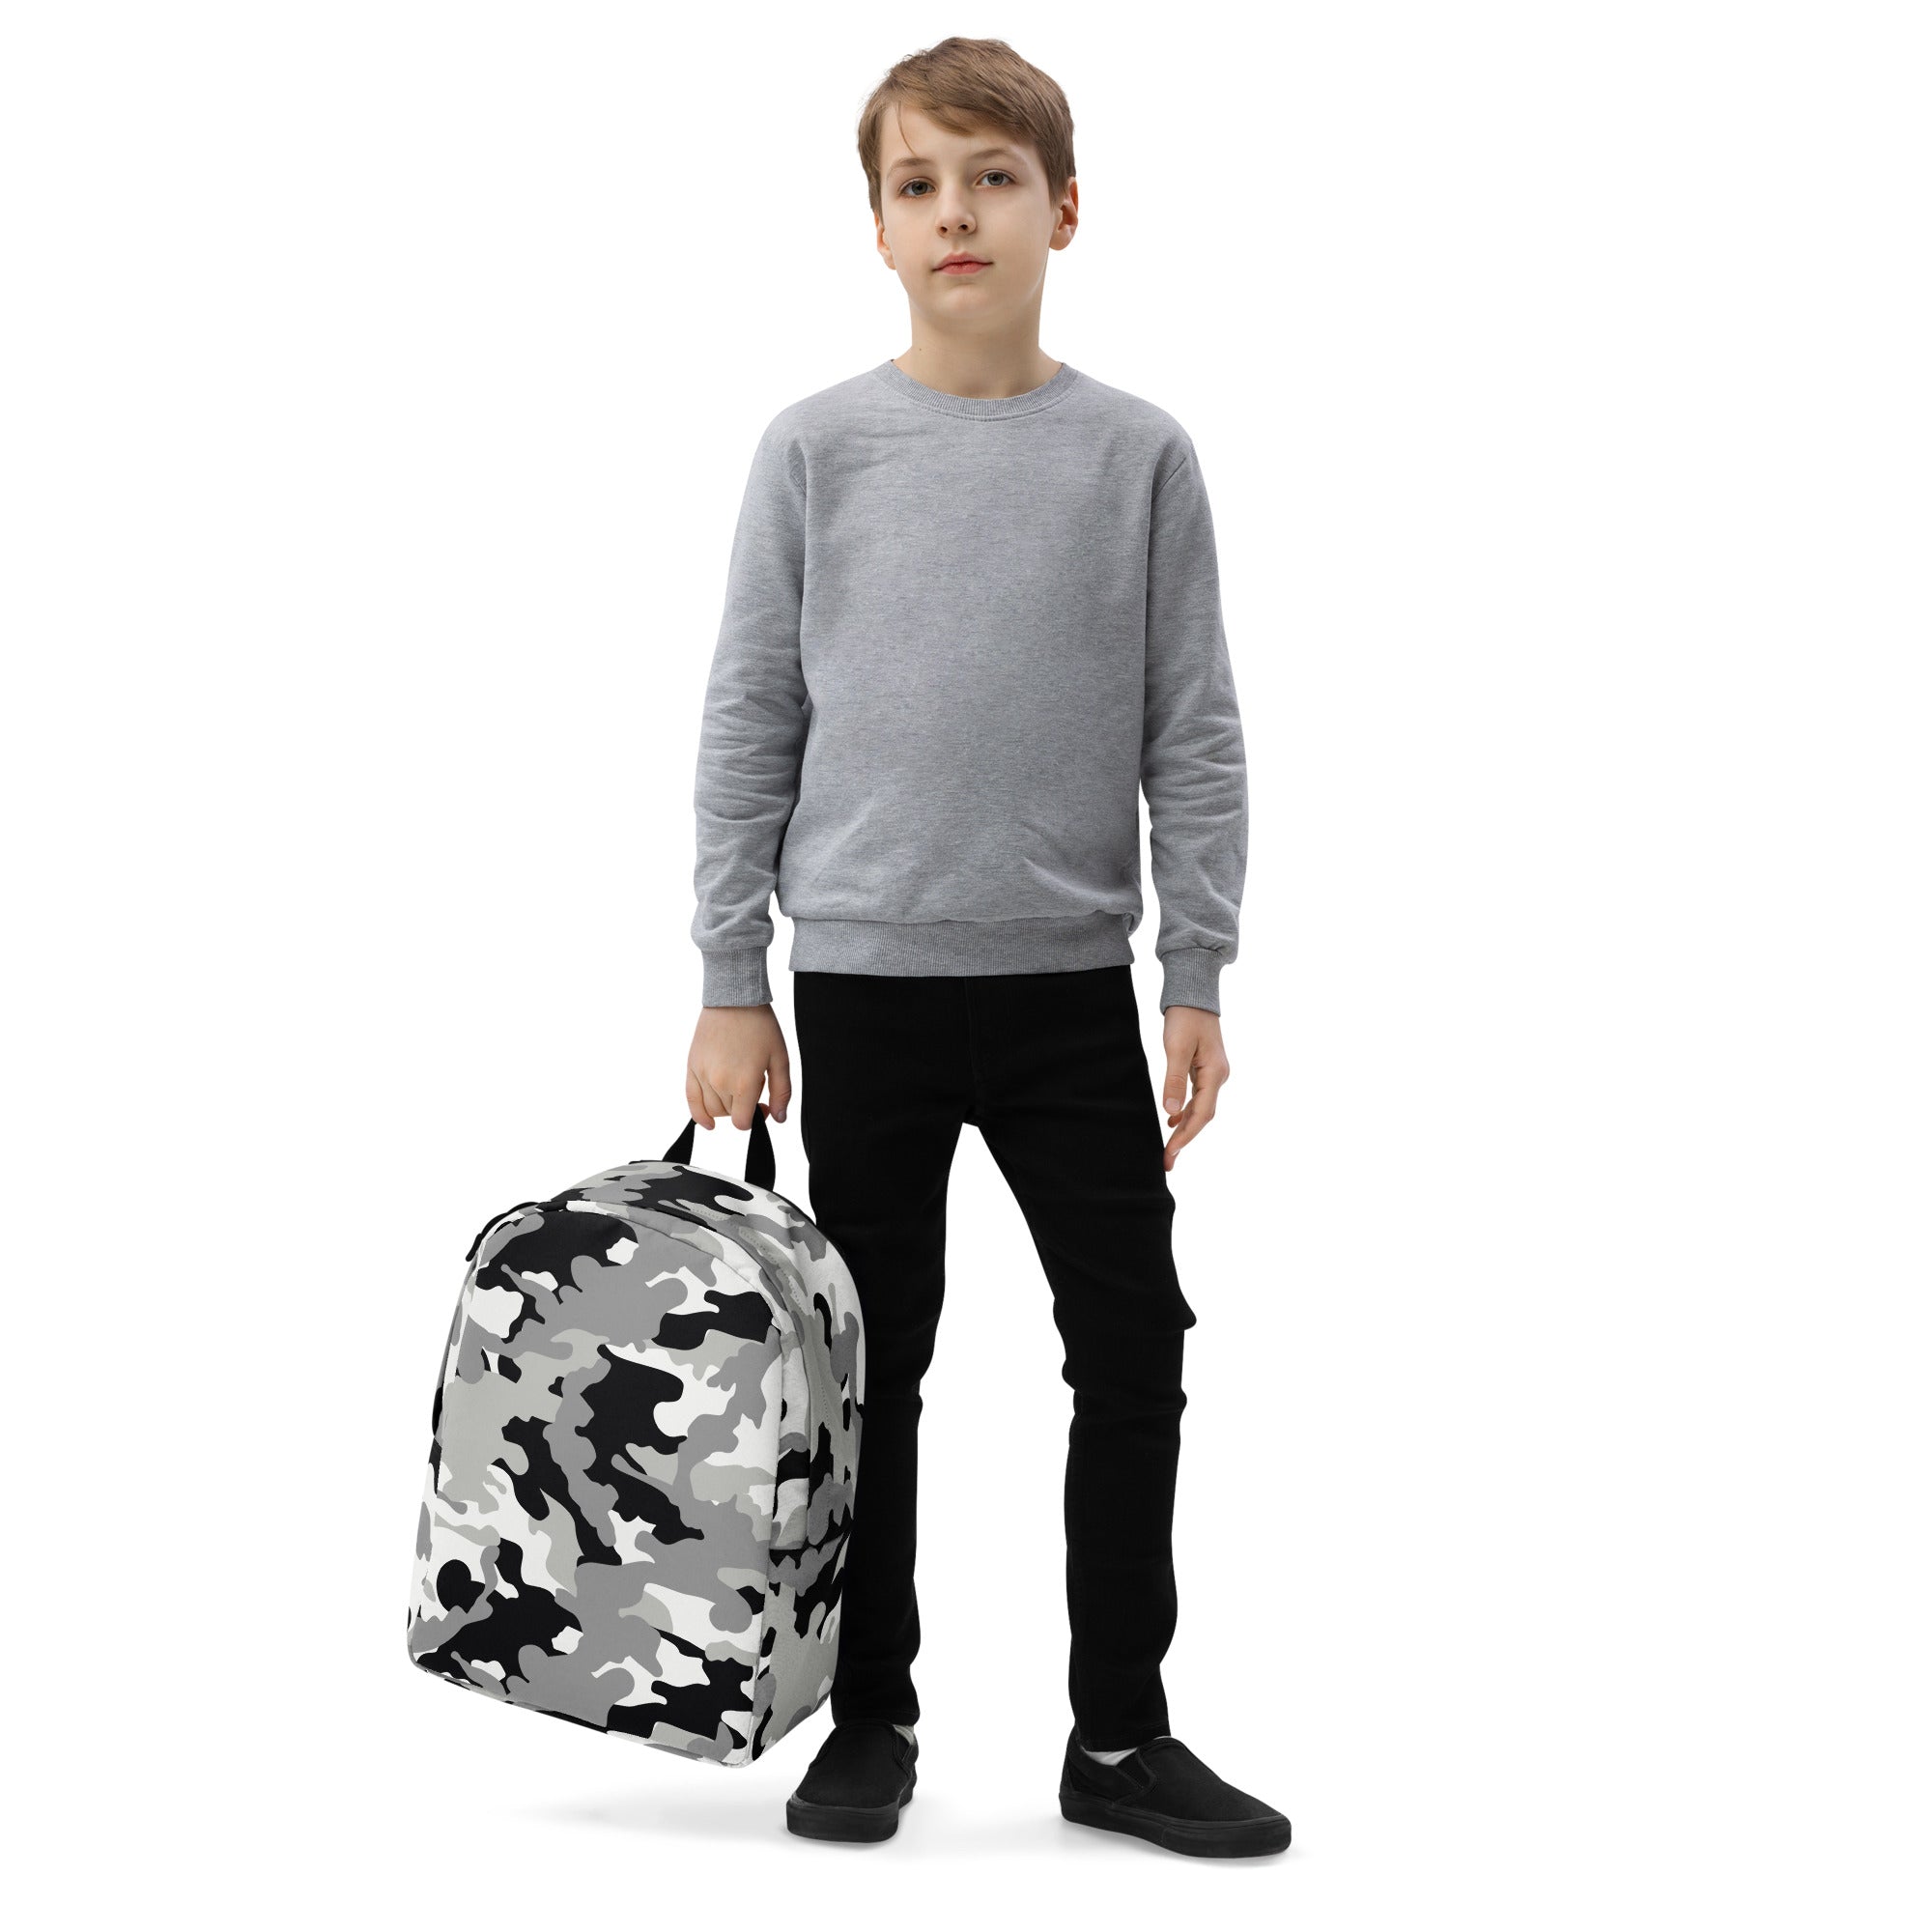 Minimalist Backpack- Camo Black And Grey